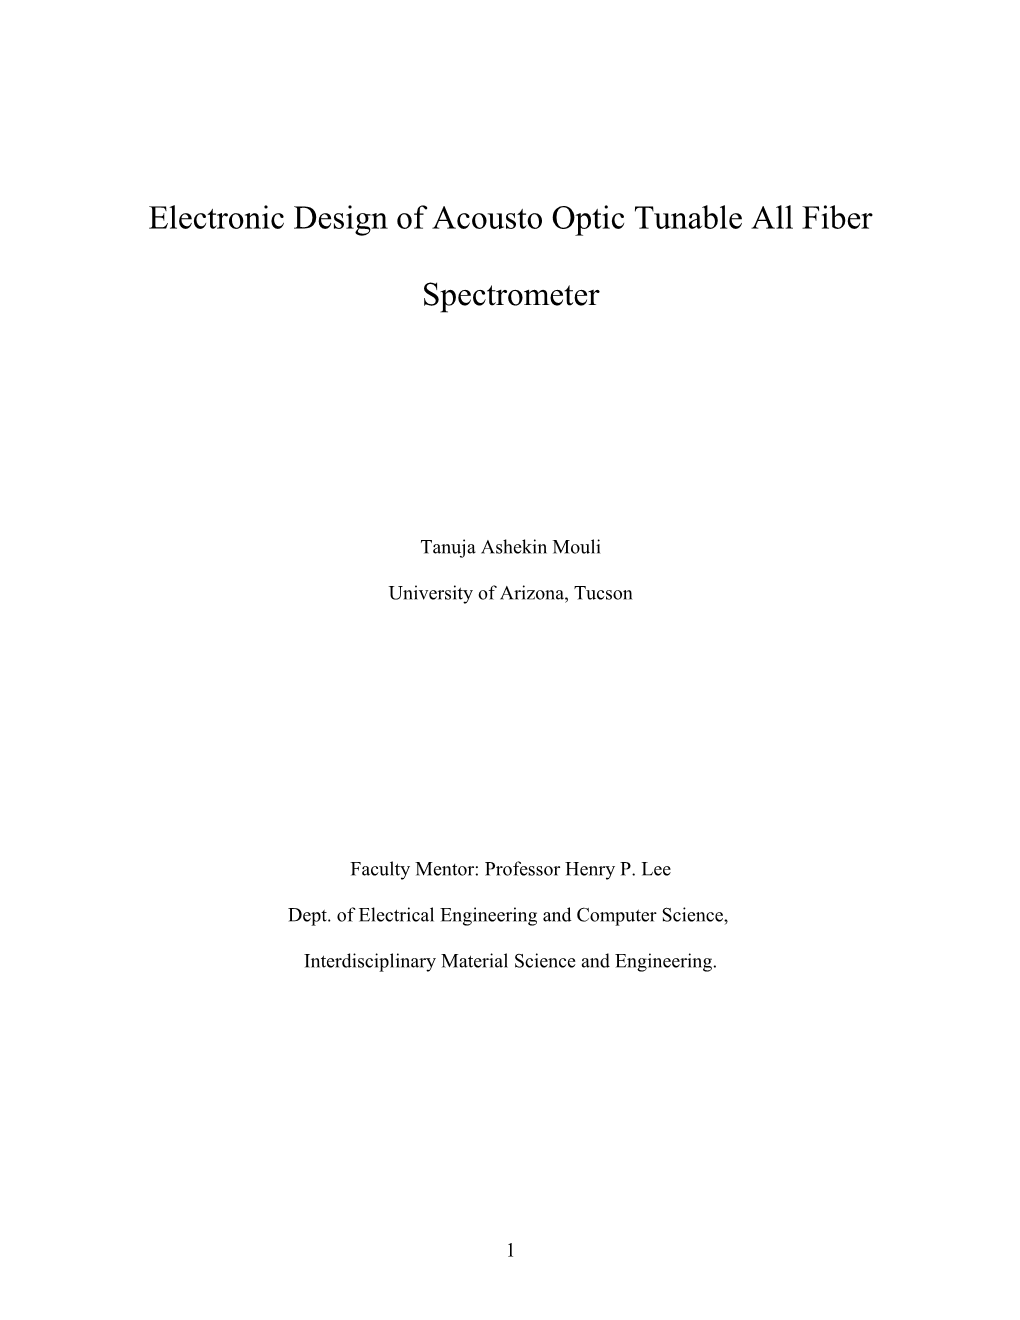 Electronic Design of Acousto Optic Tunable All Fiber Spectrometer